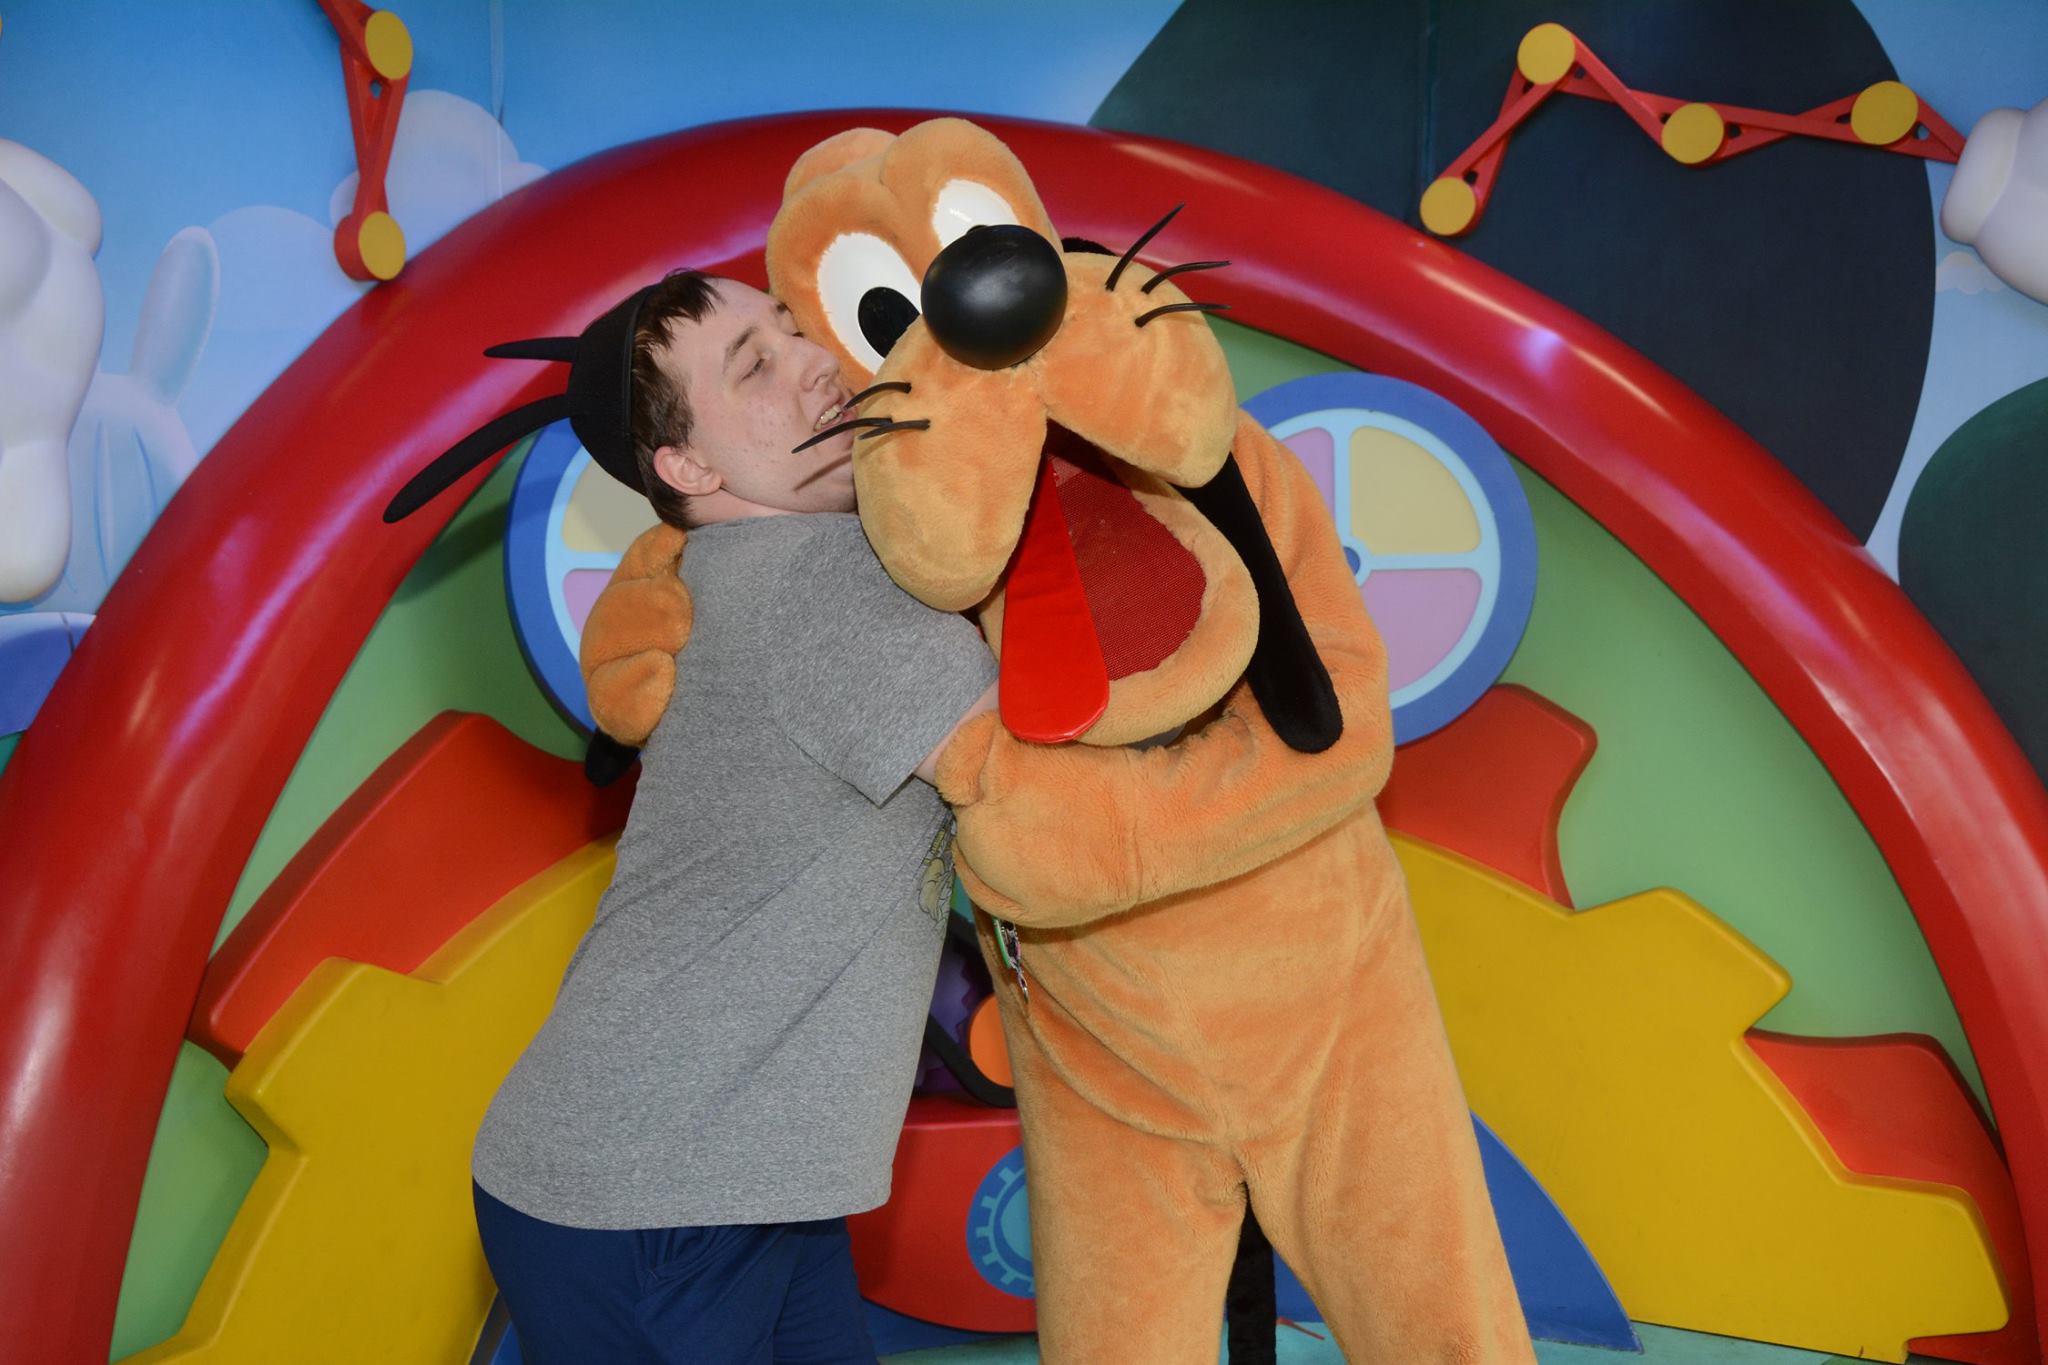 Hugging Pluto again